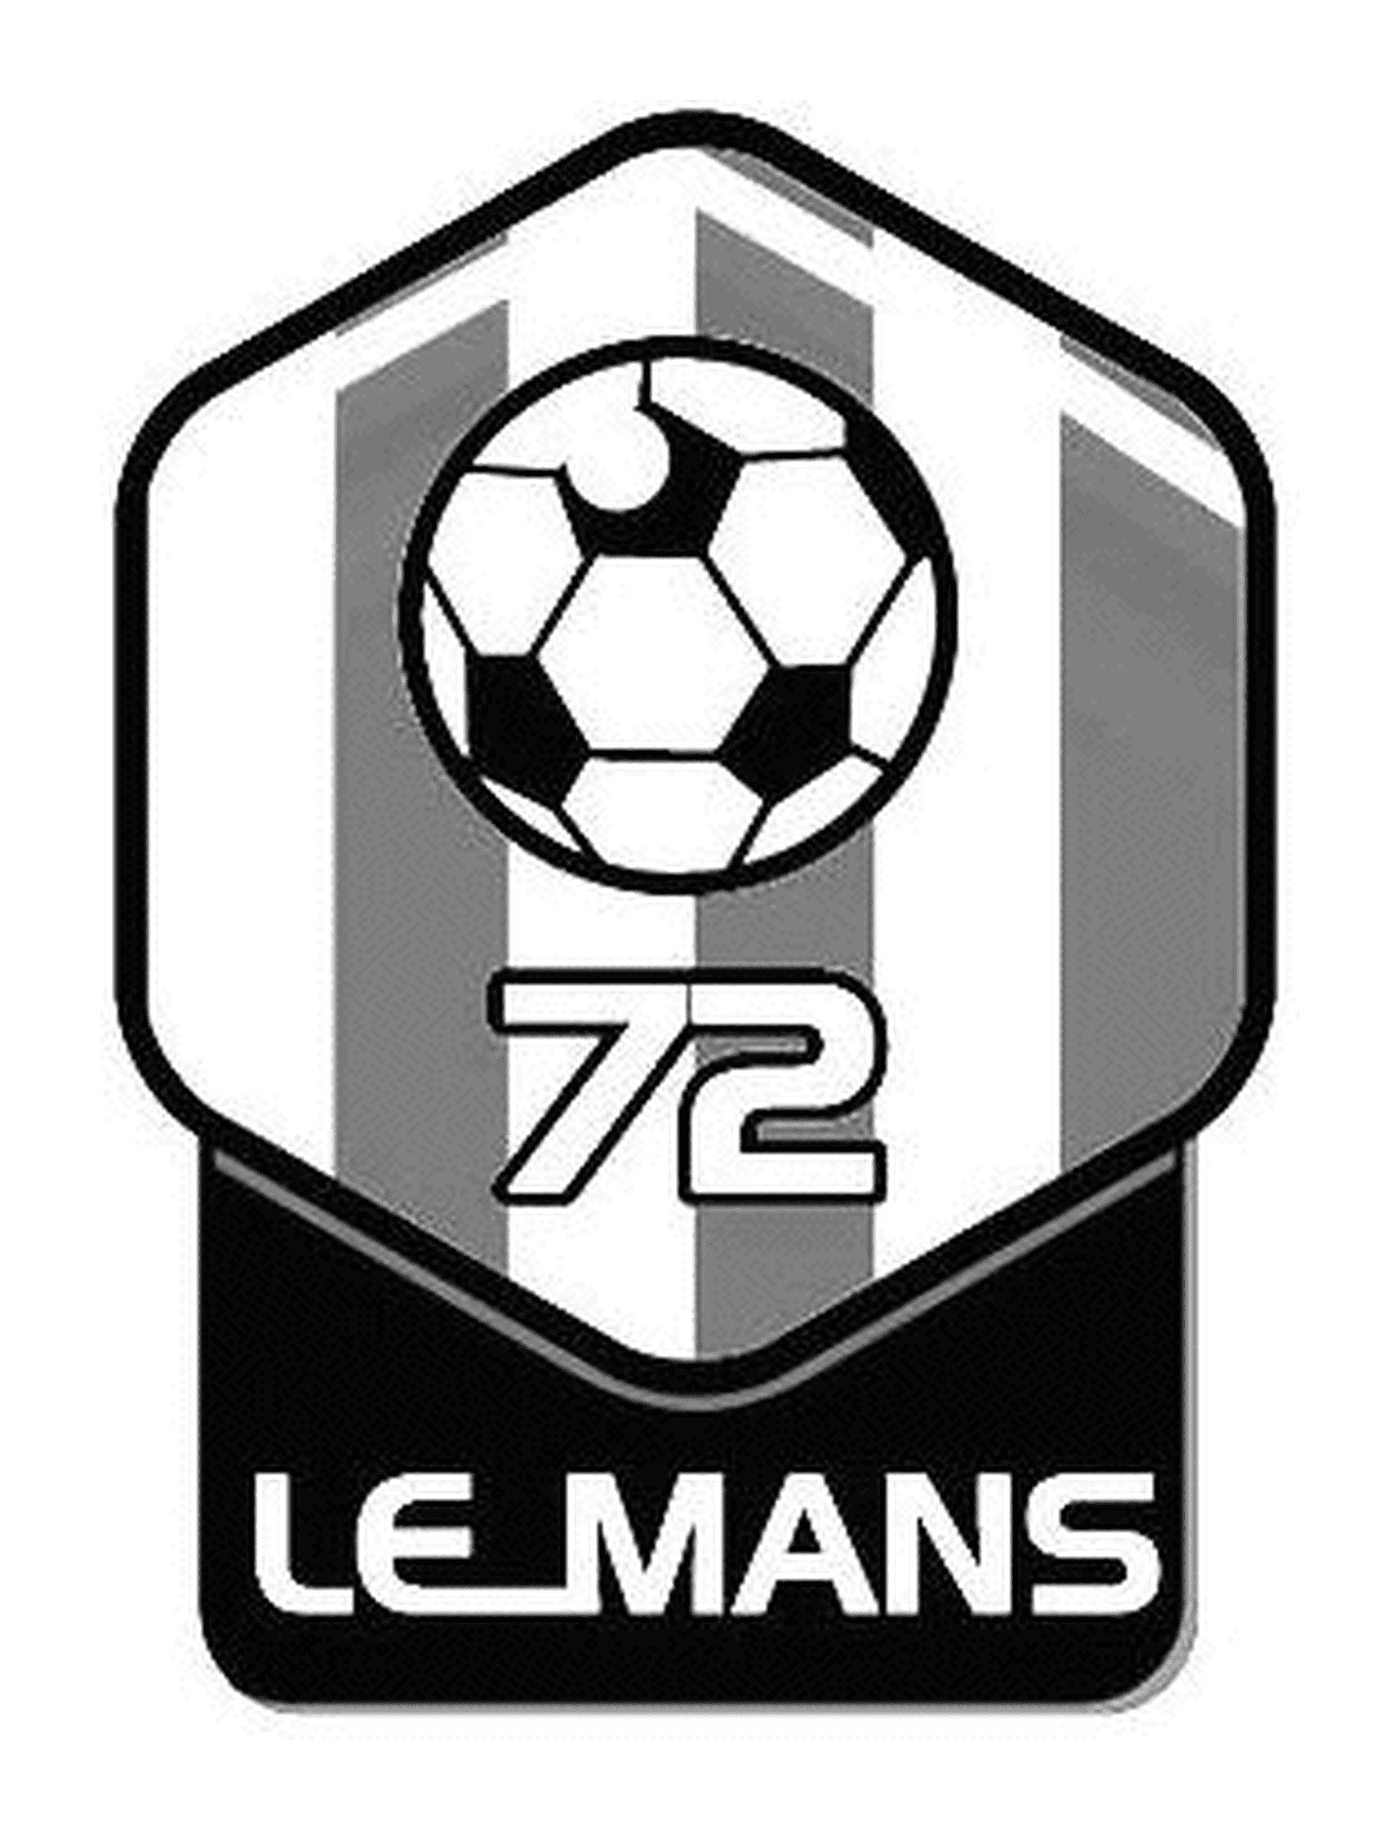  Mans logo 